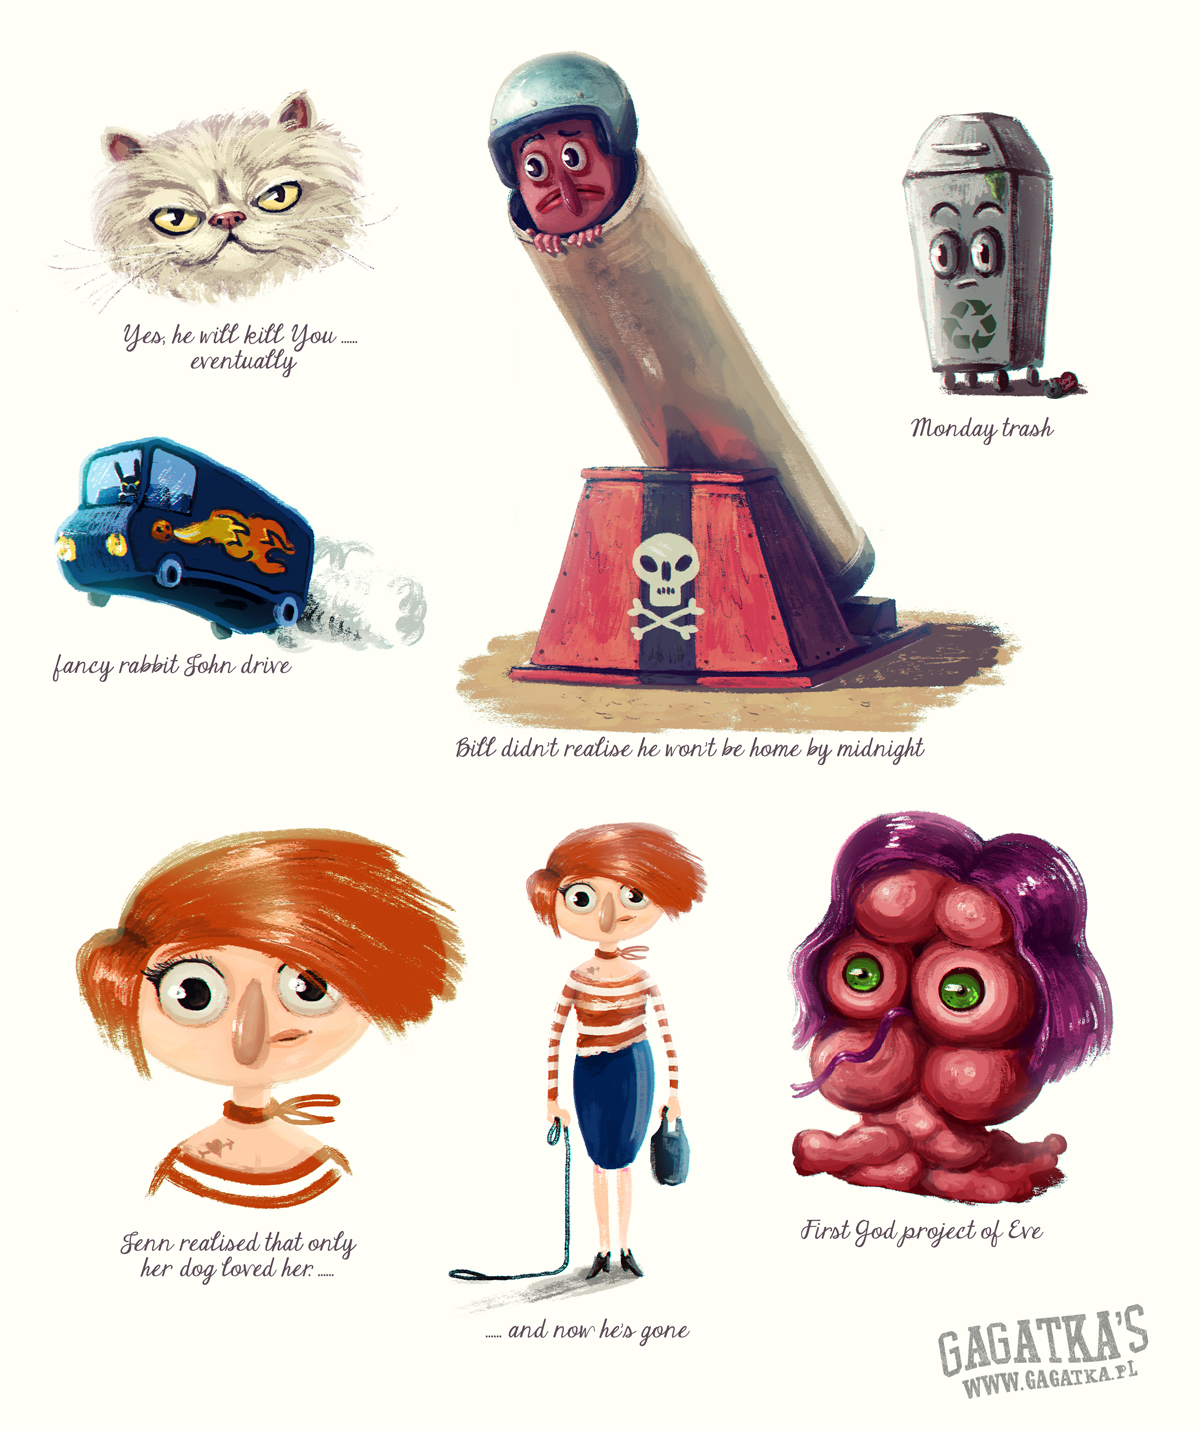 Character gagatka digital painting funny funny character monster Cat portraits portrait wacom doodle doodles Digital Doodle